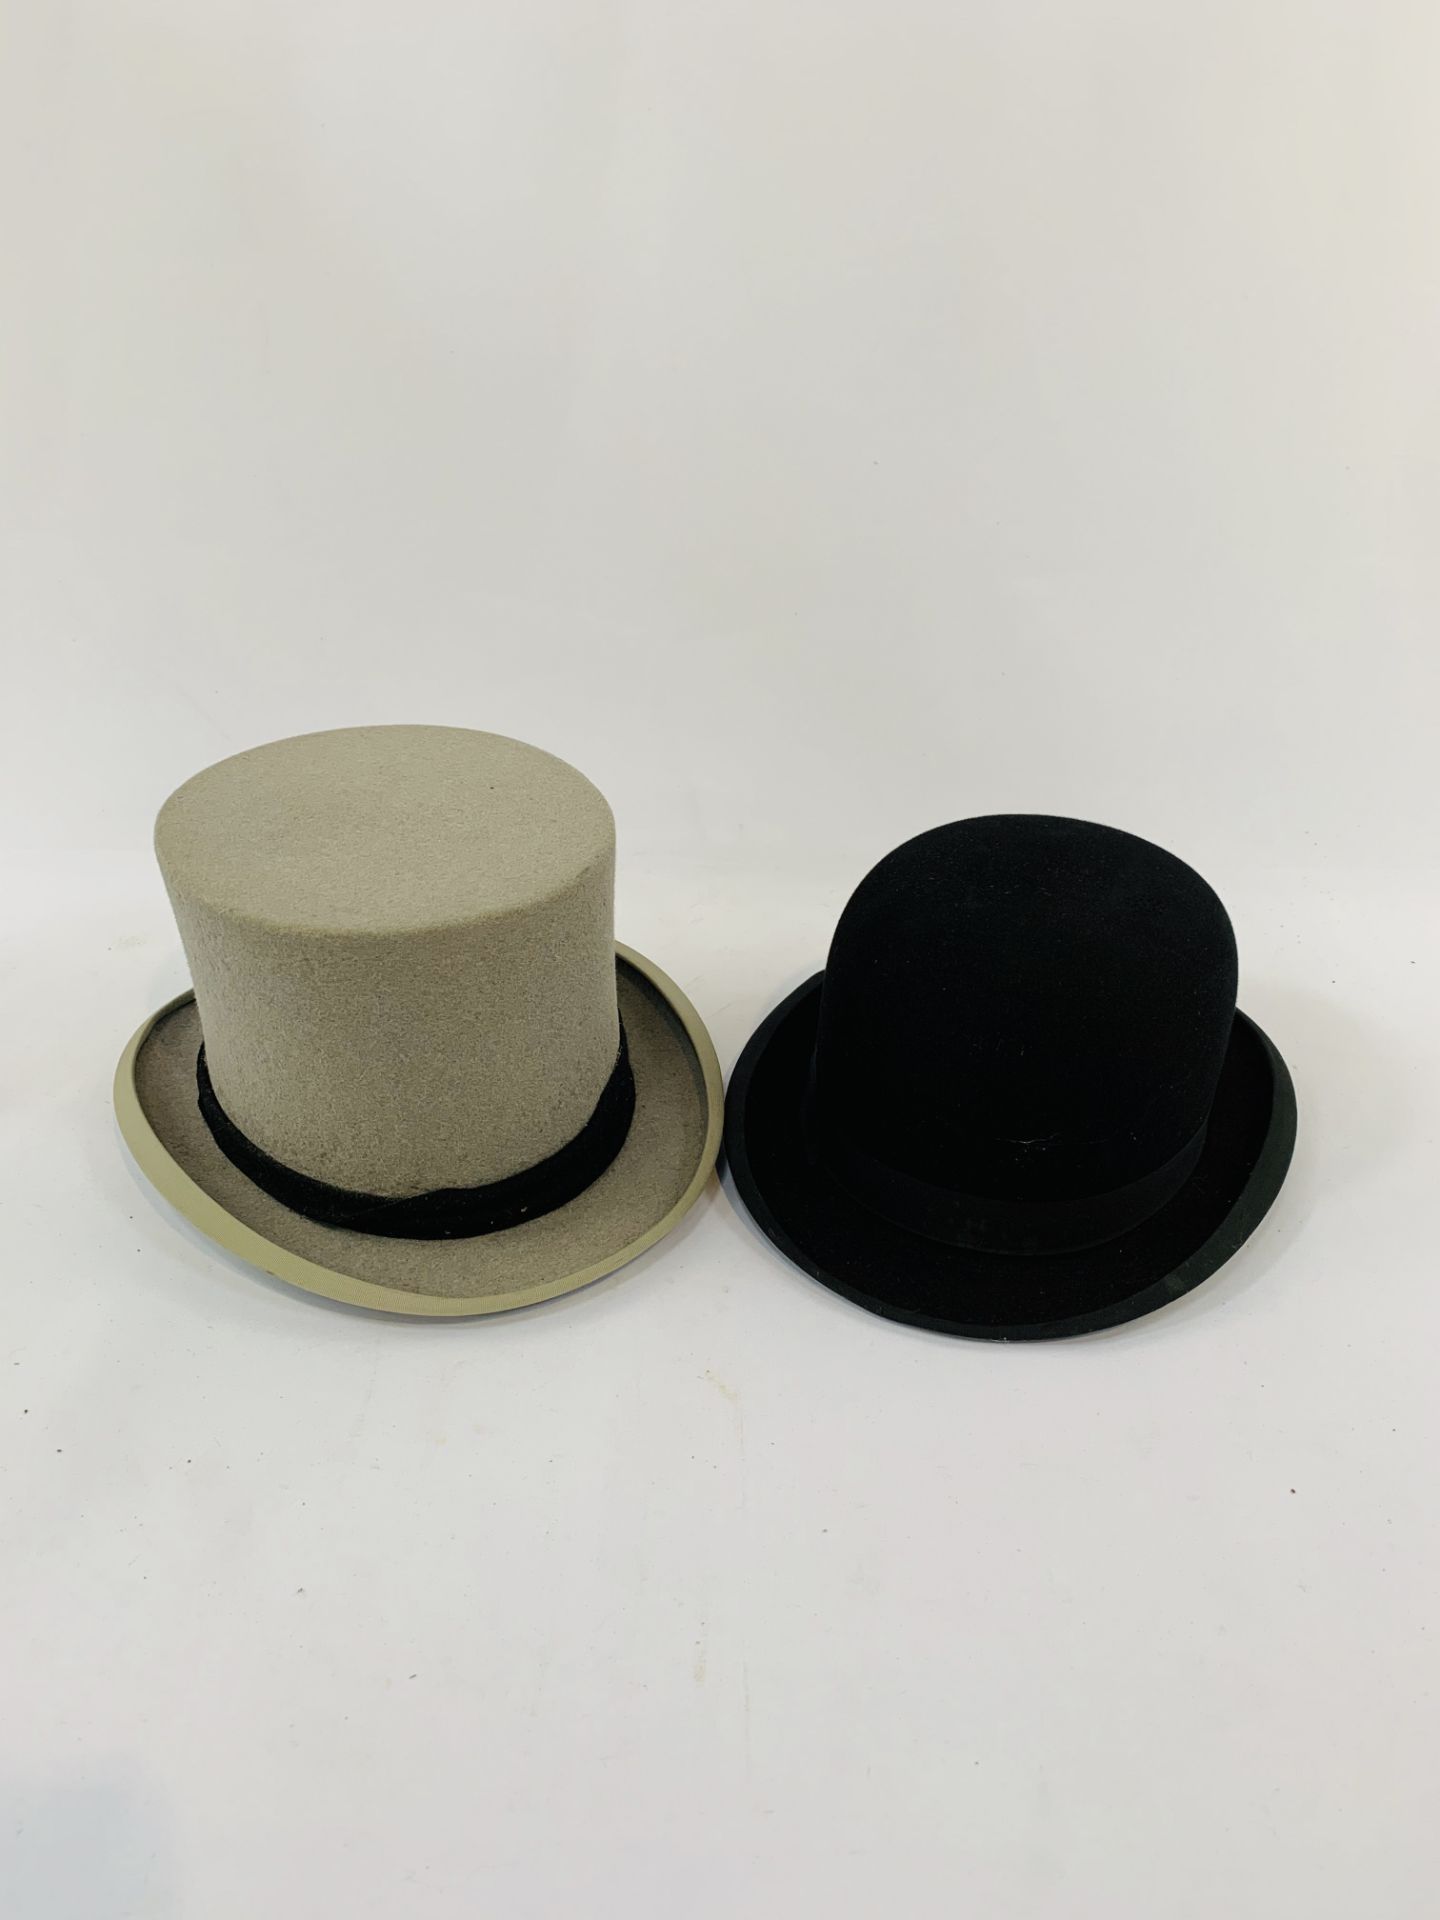 Gentleman's pure wool long overcoat, grey top hat and black bowler hat - Image 2 of 2